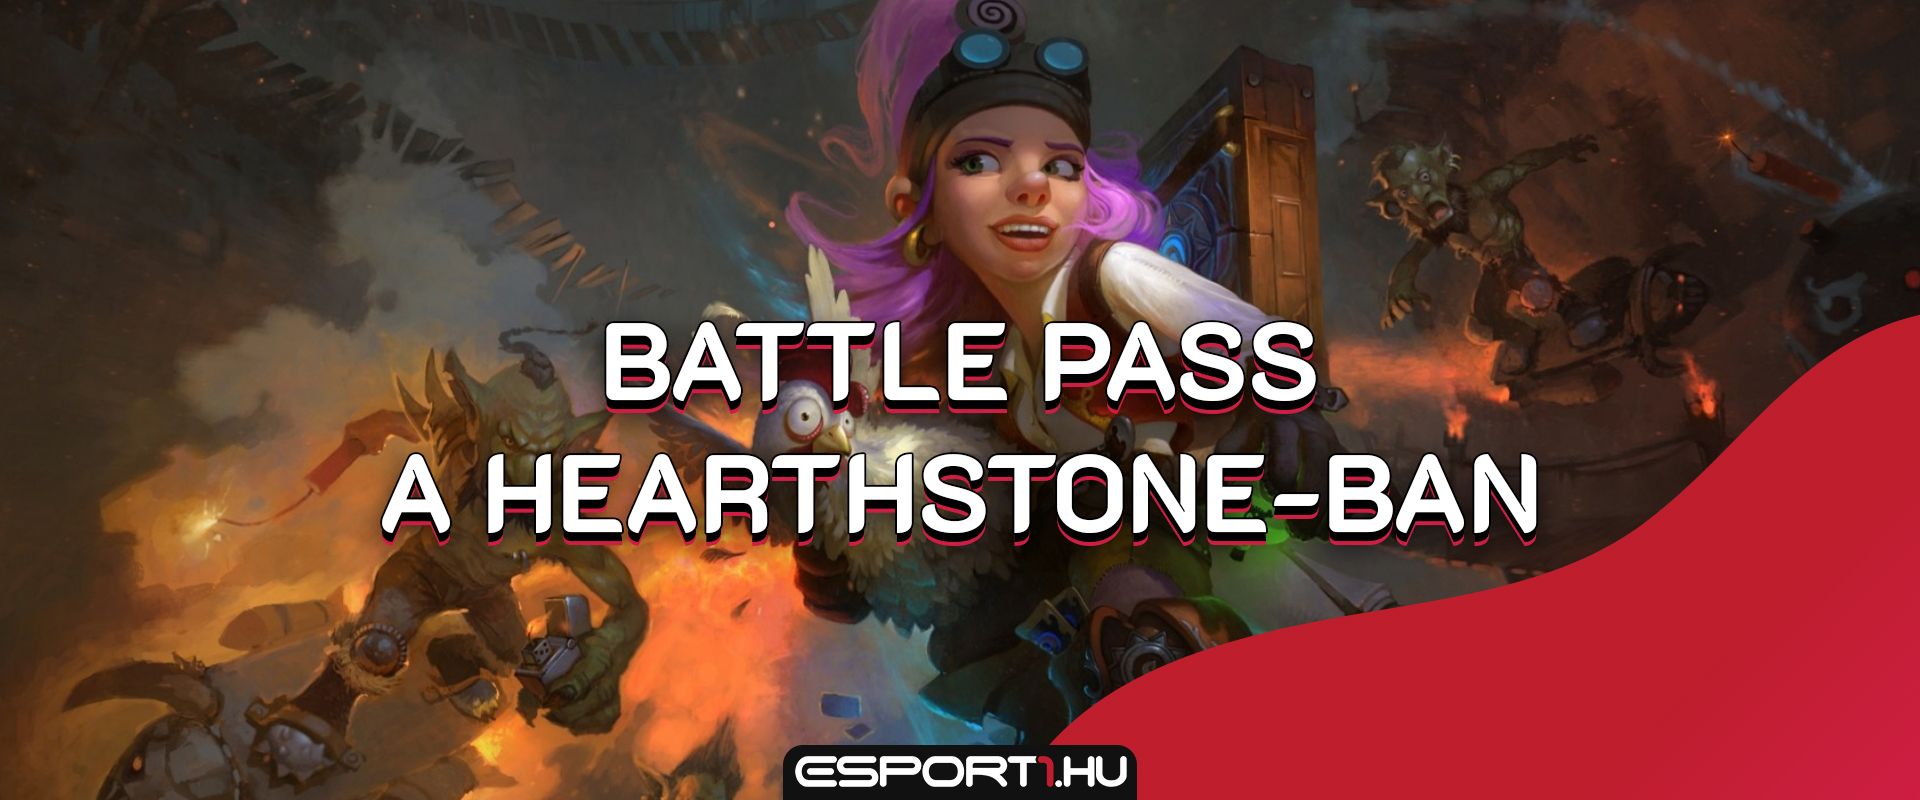 Érkezhet a Battle Pass rendszer a Hearthstone-ba